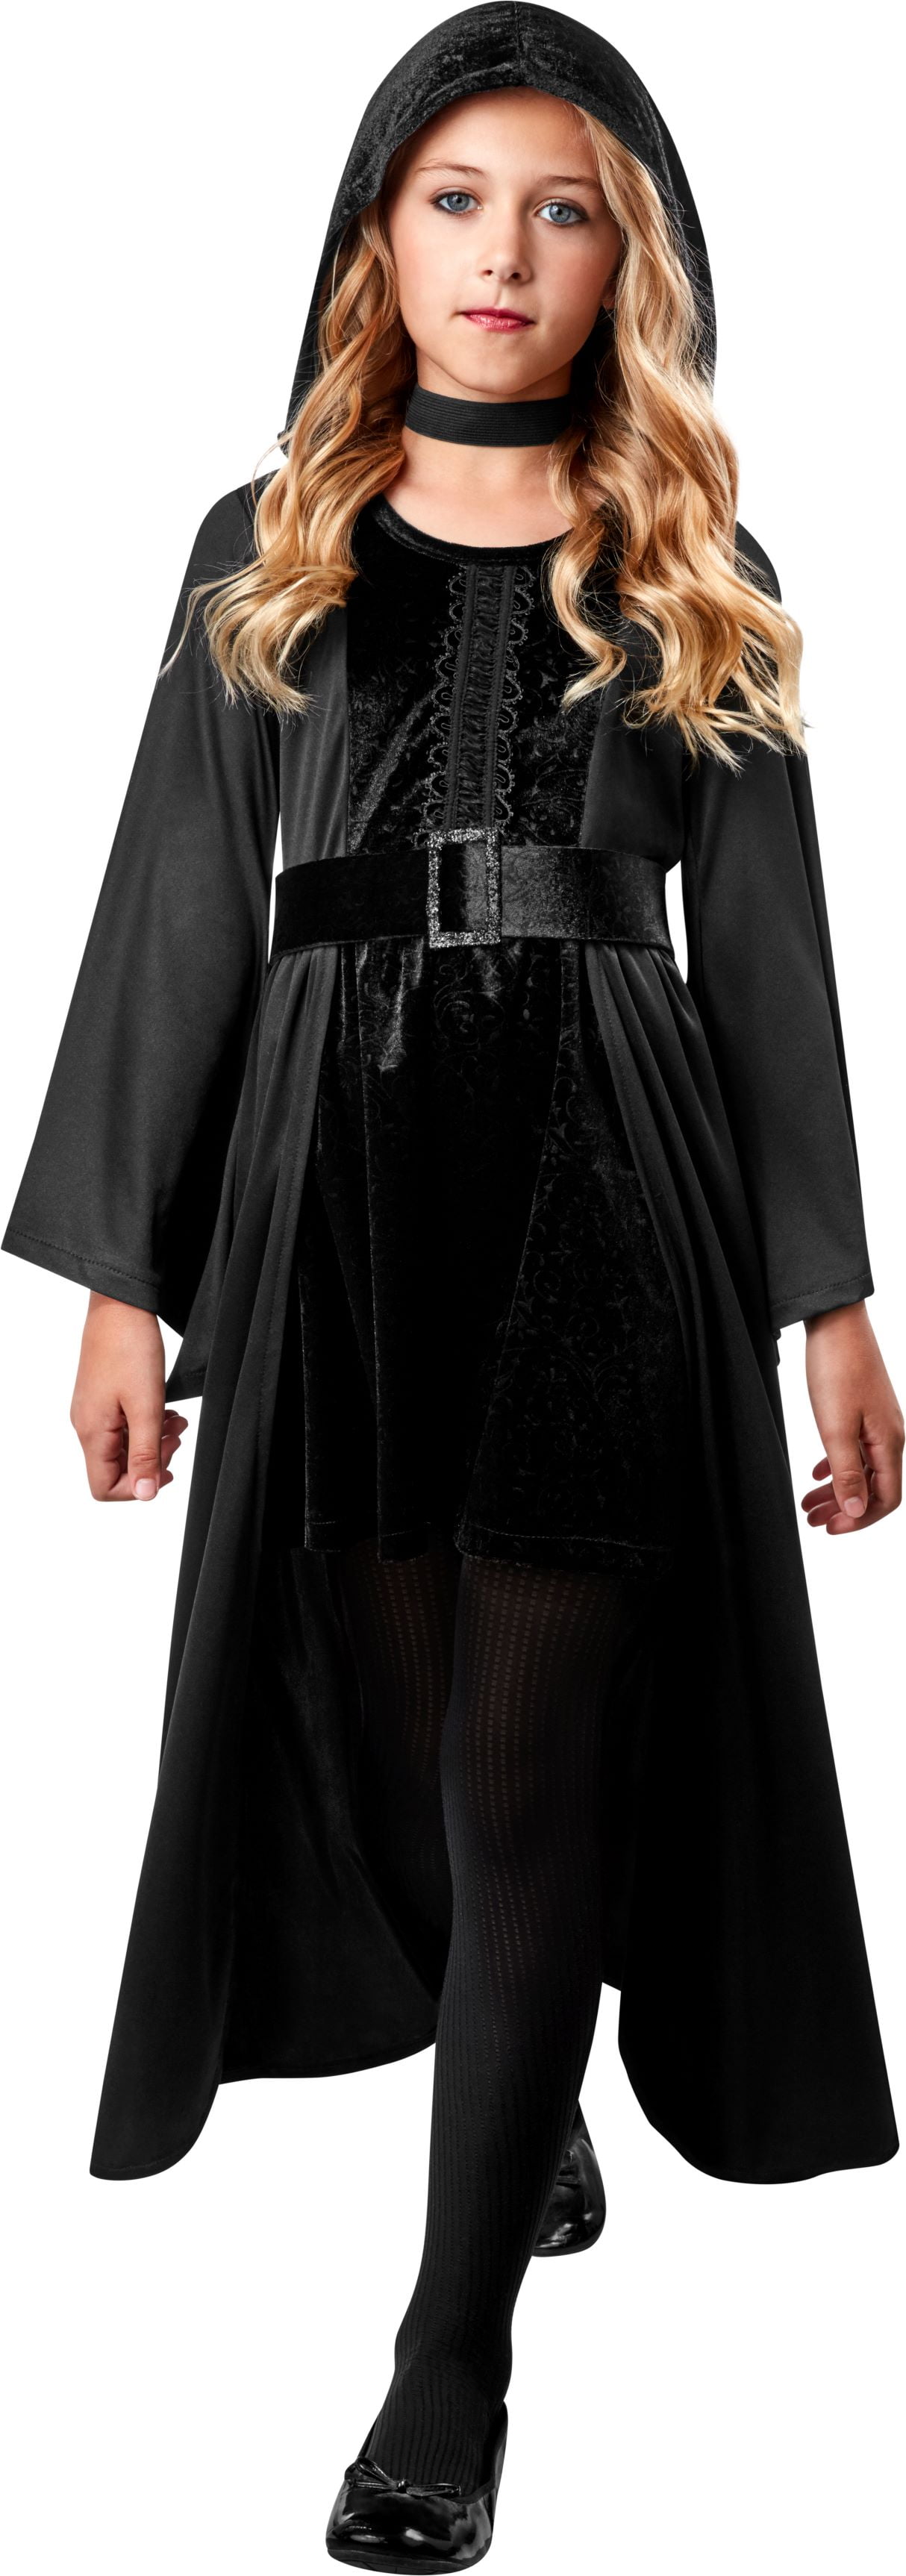 Girls Coven Halloween Costume M, Black